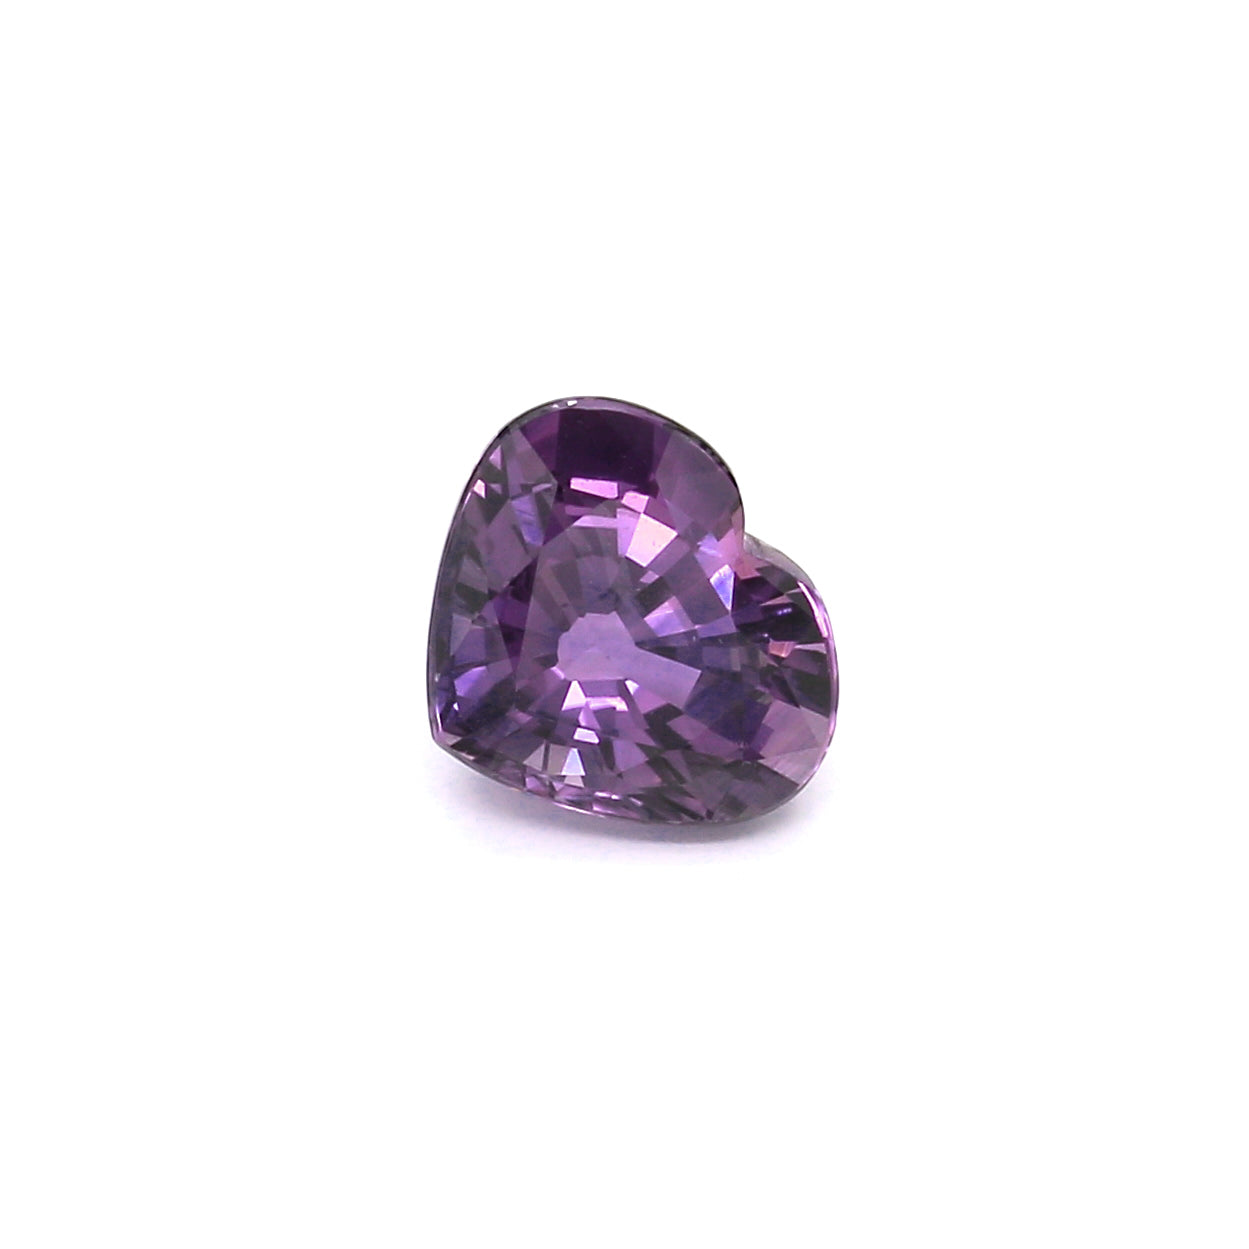 2.04ct Violetish Blue / Purple, Heart Shape Color Change Sapphire, Heated, Sri Lanka - 7.03 x 8.33 x 4.61mm